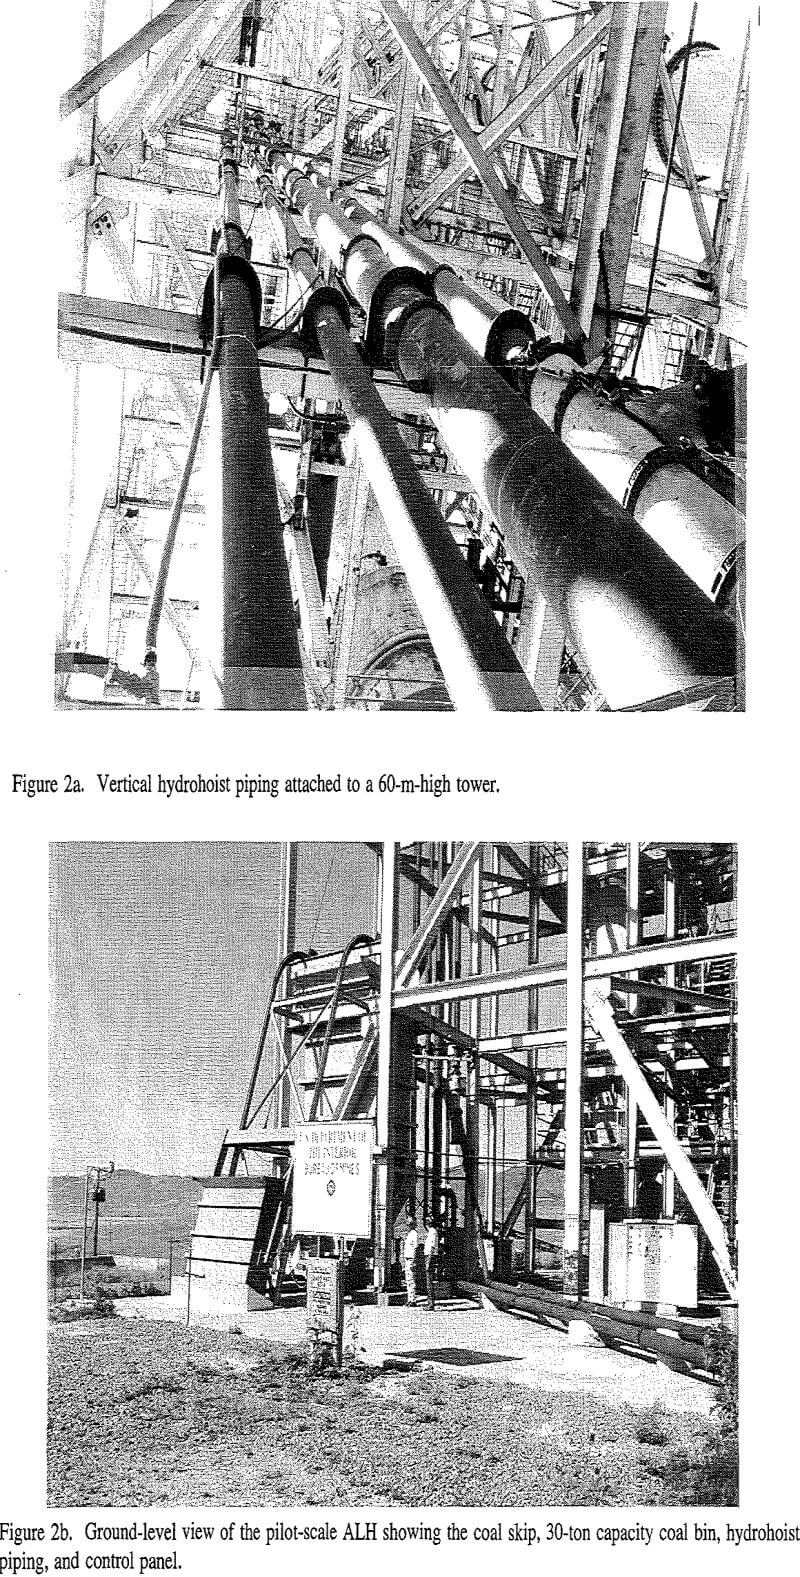 coal air-lift hydrohoist vertical piping